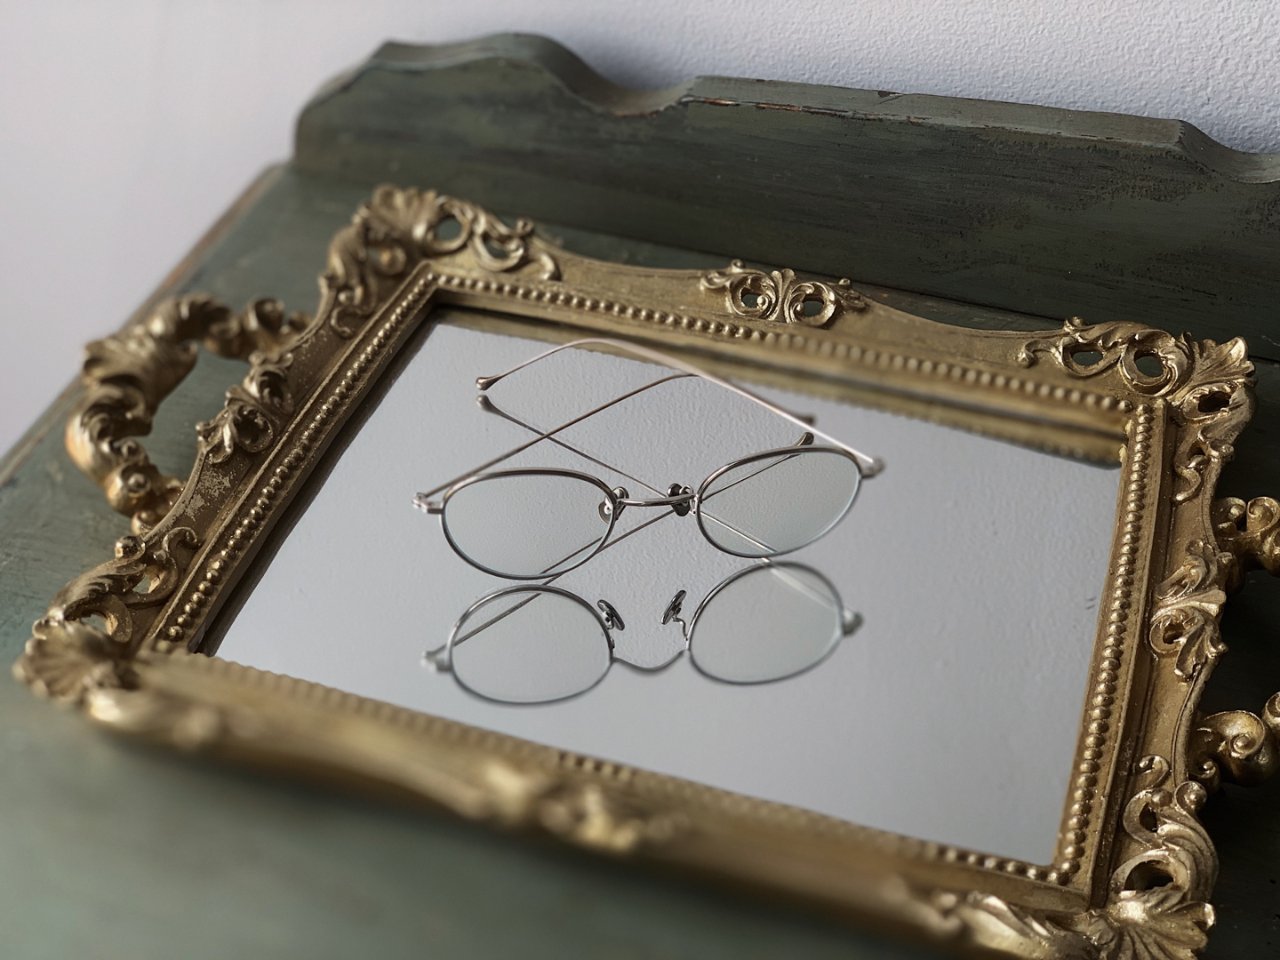 eyevan,atelier mira,光学眼镜,眼镜框,细框眼镜,800美元